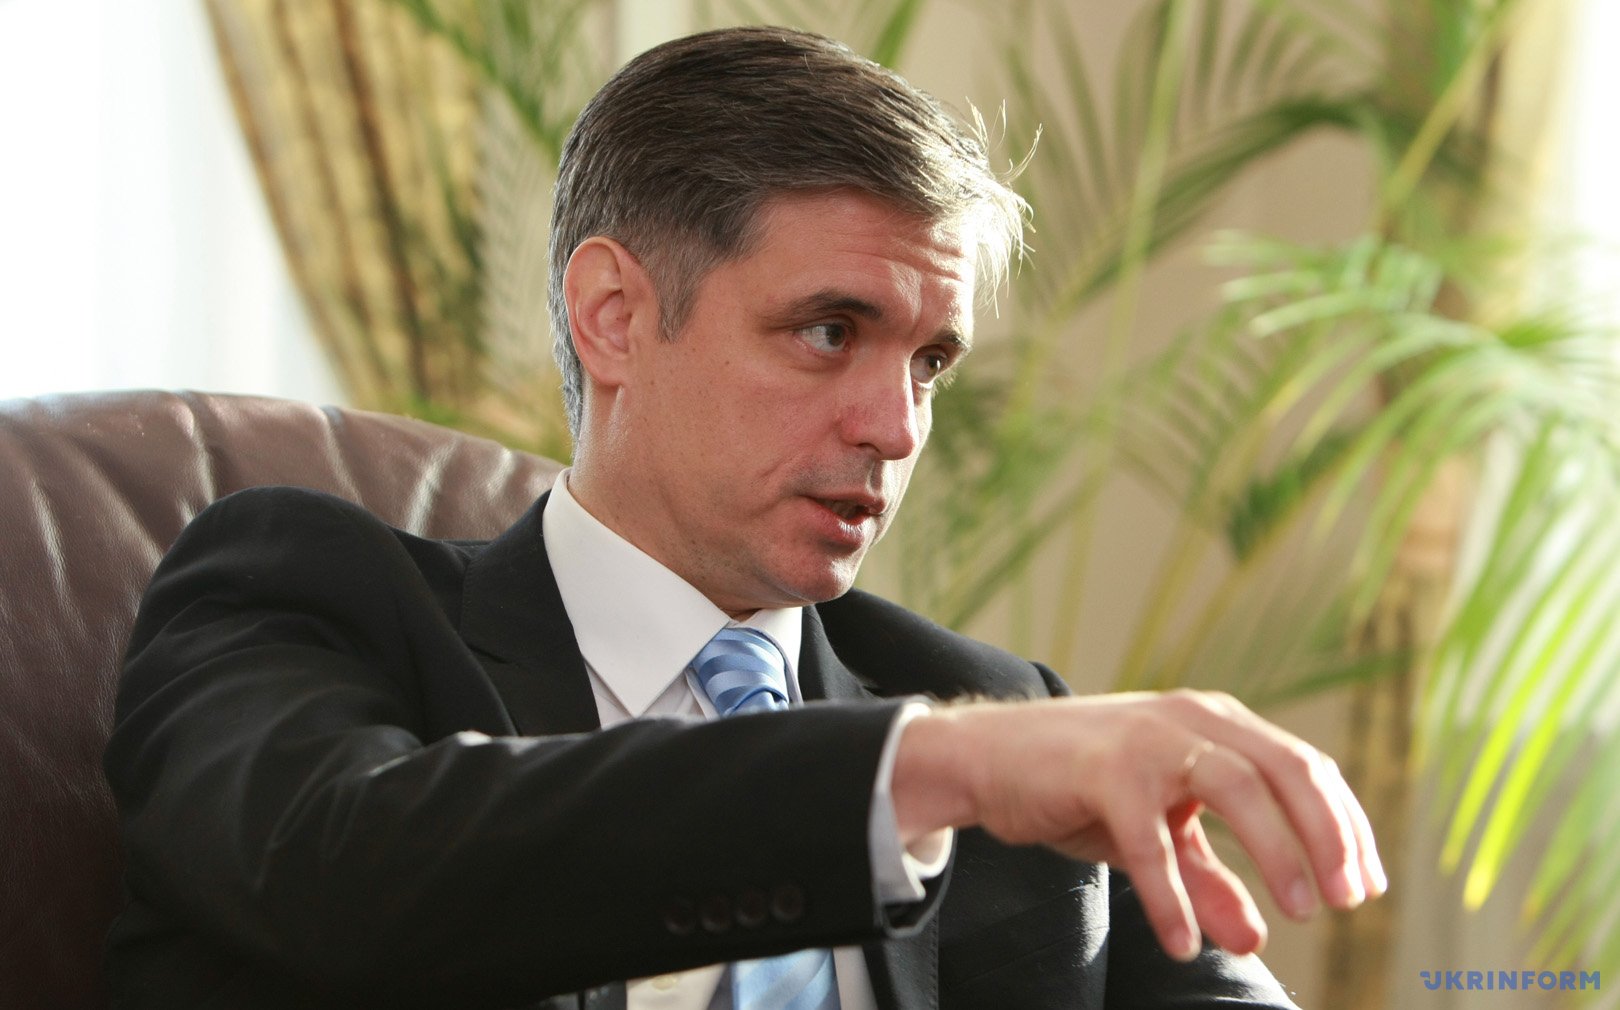 Vadym Prystaiko, Head of Ukraine's Mission to NATO